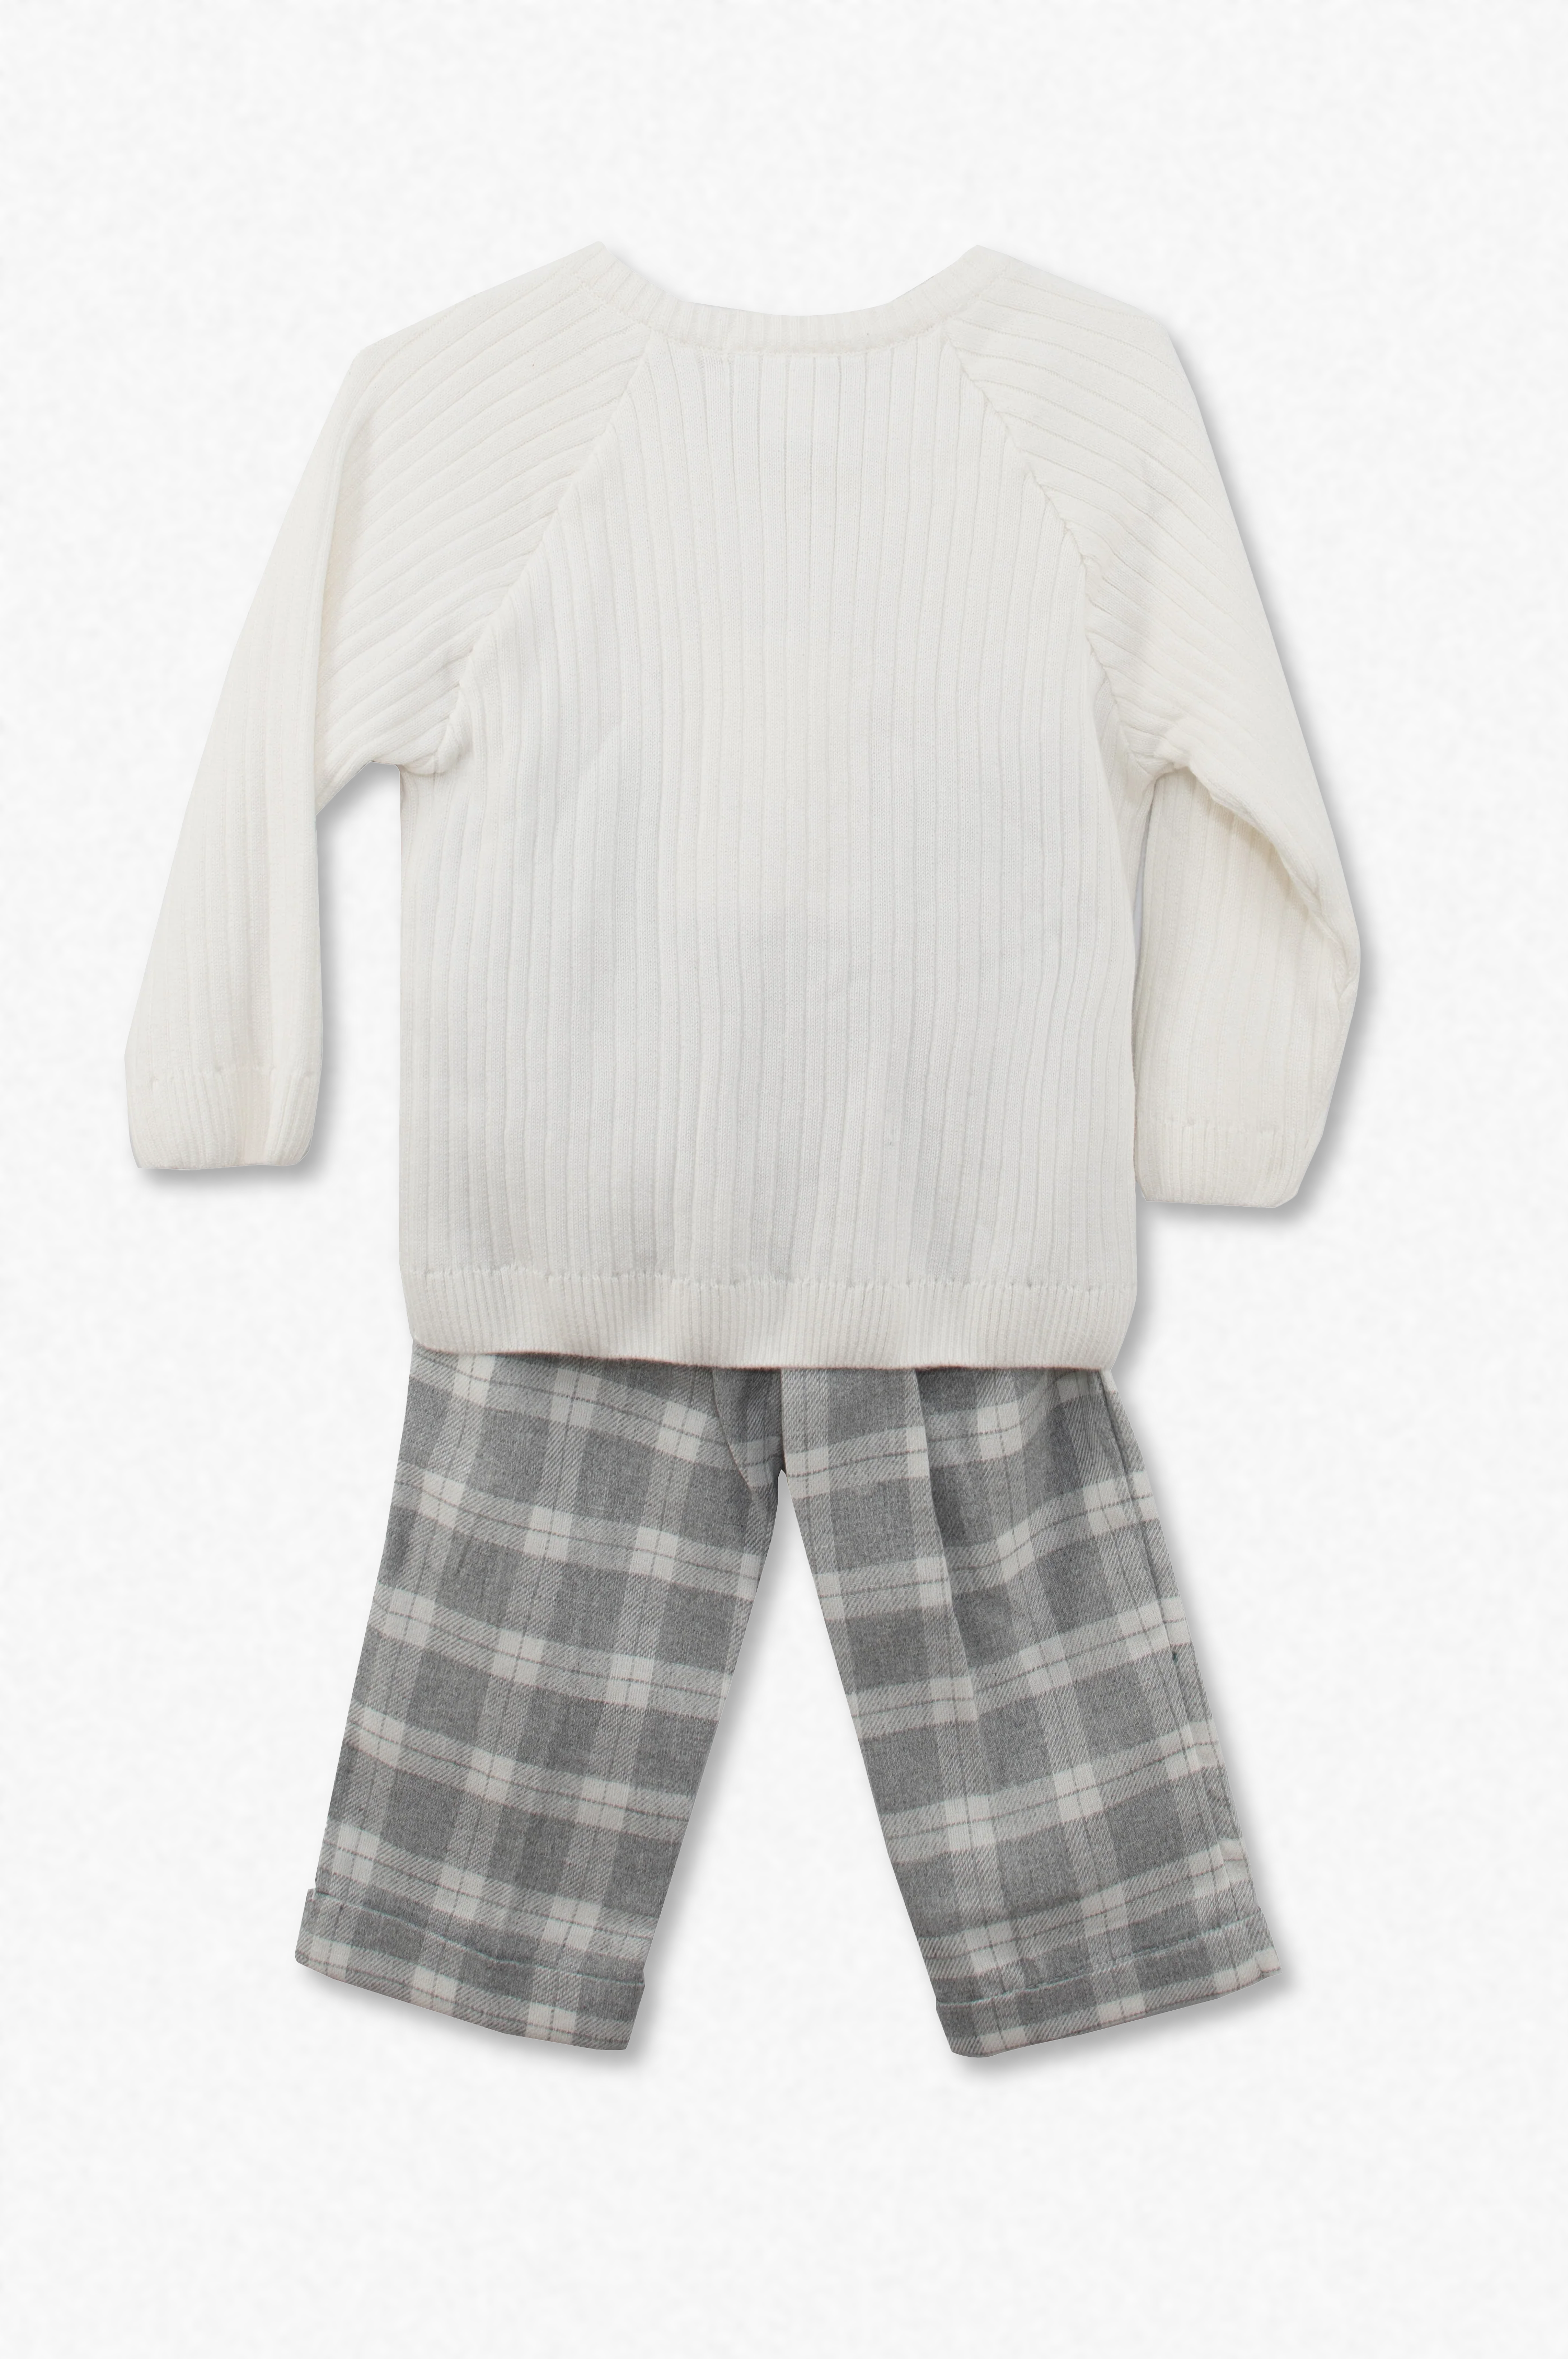 30028-White & Gray Heathered Plaid Baby Boy Pant Set